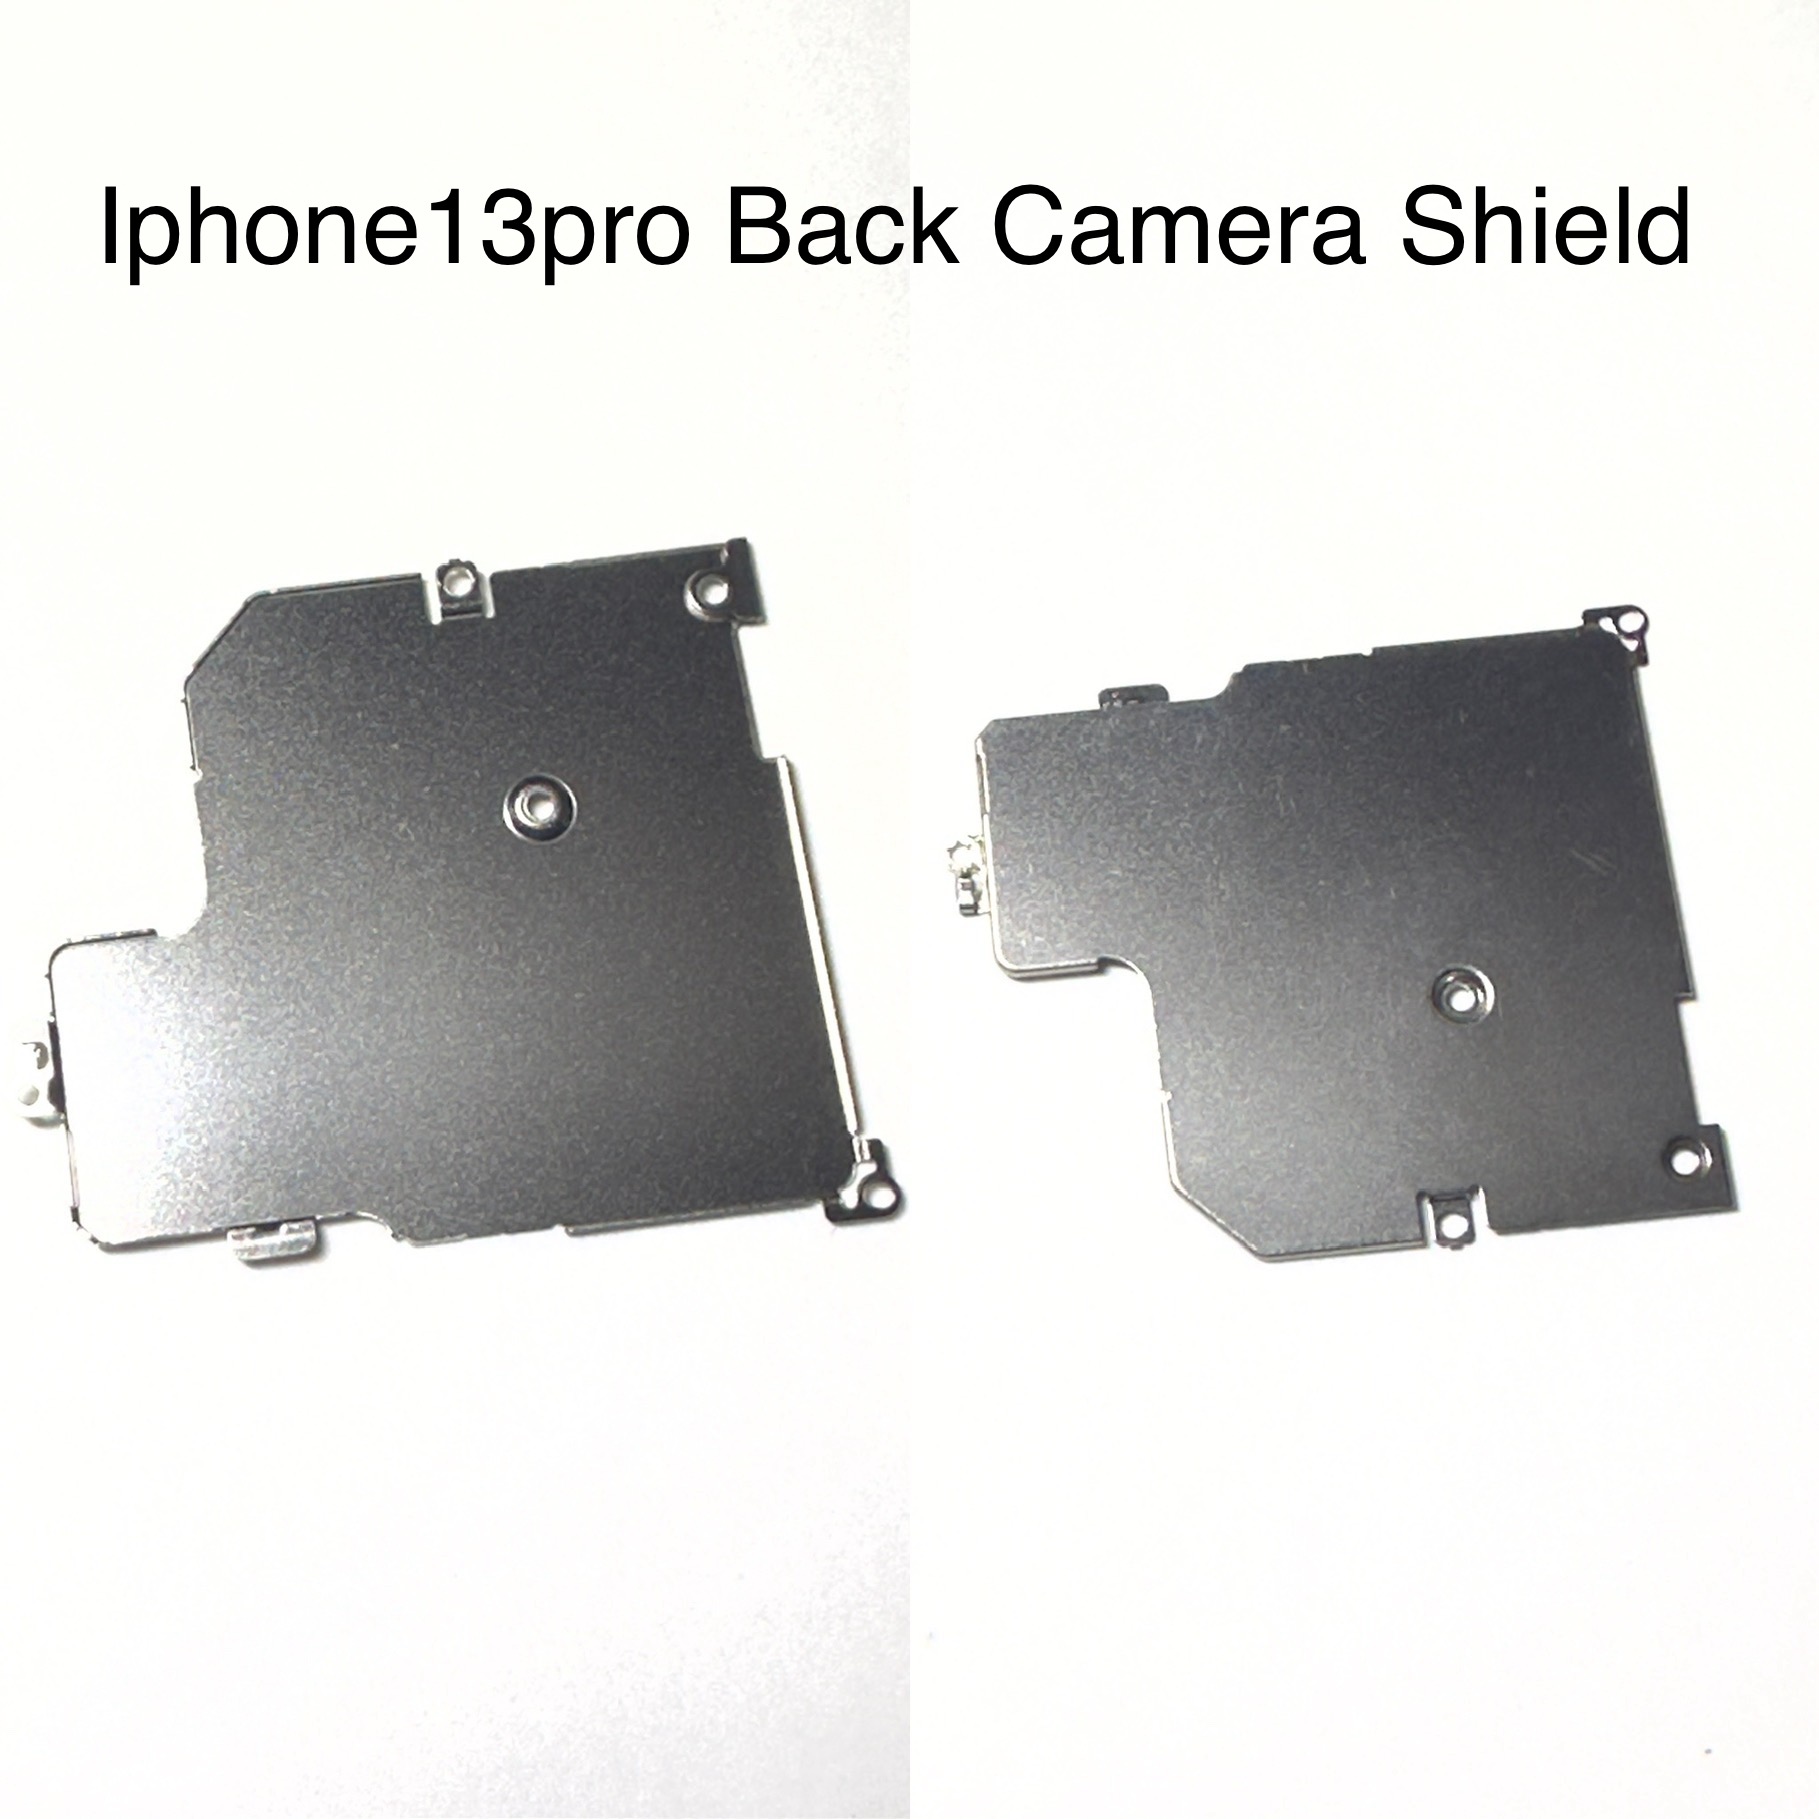 iphone13pro back camera shield